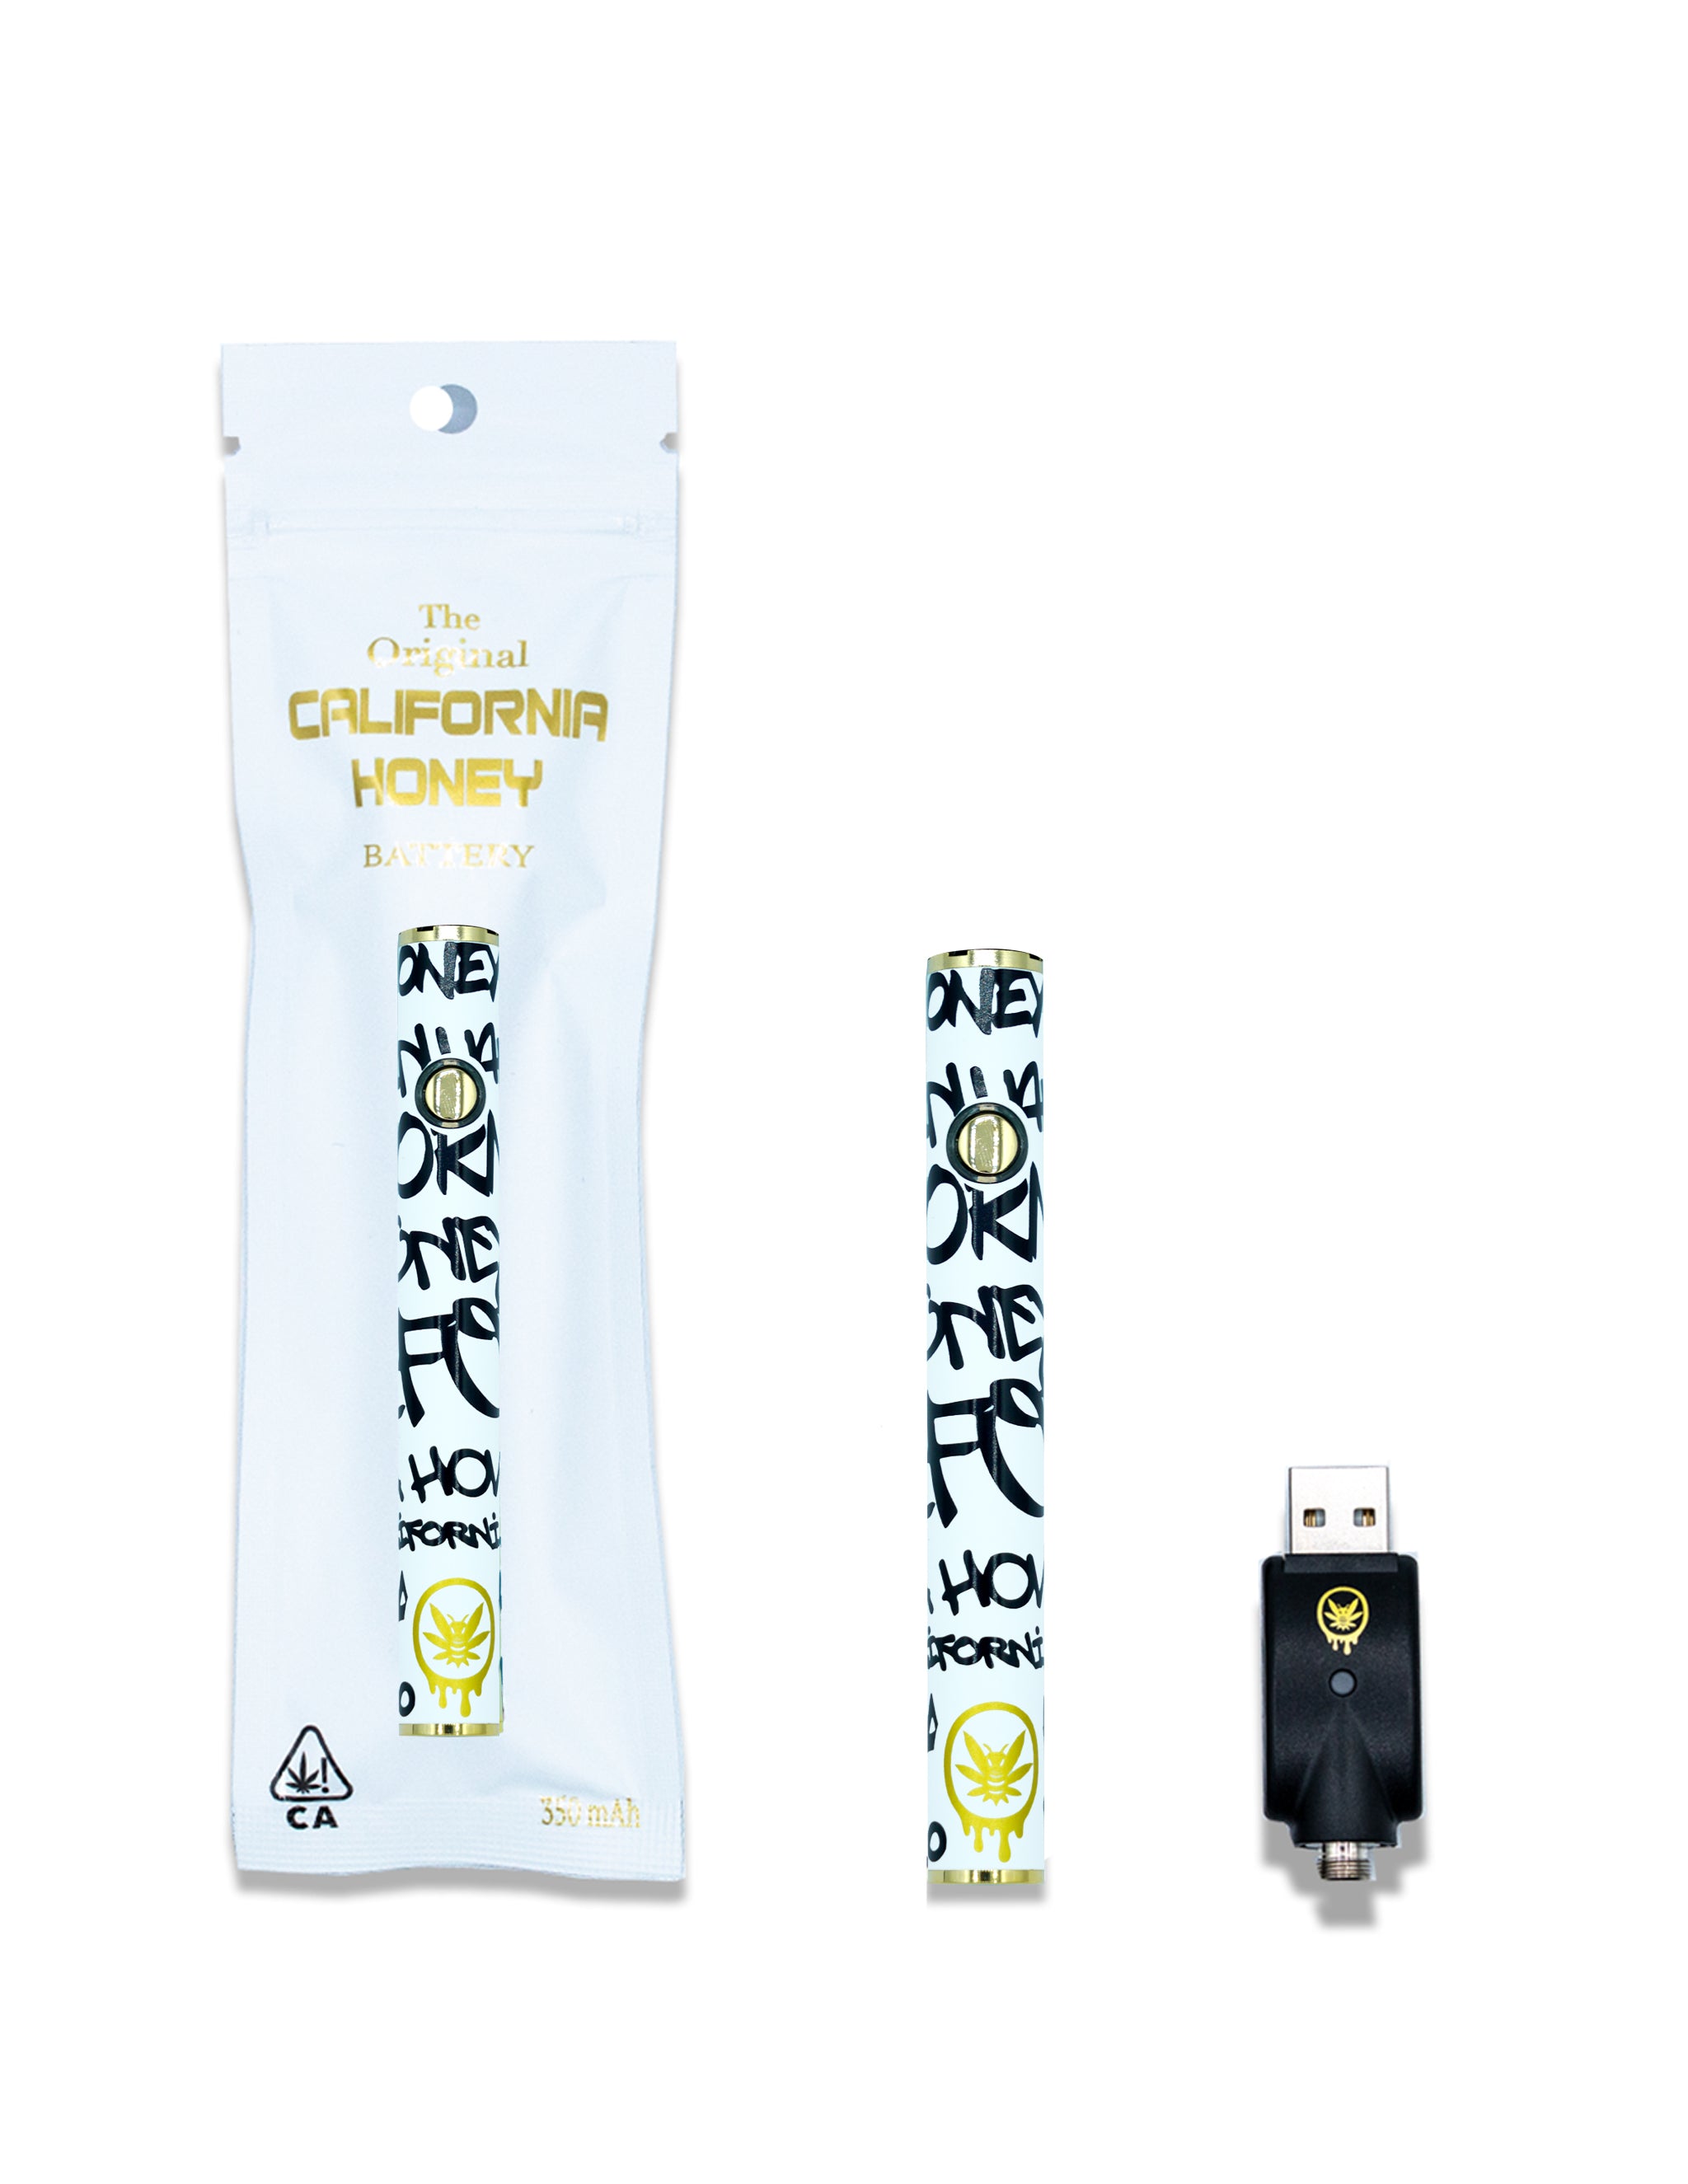 California Honey – New White Battery w Black Graffiti